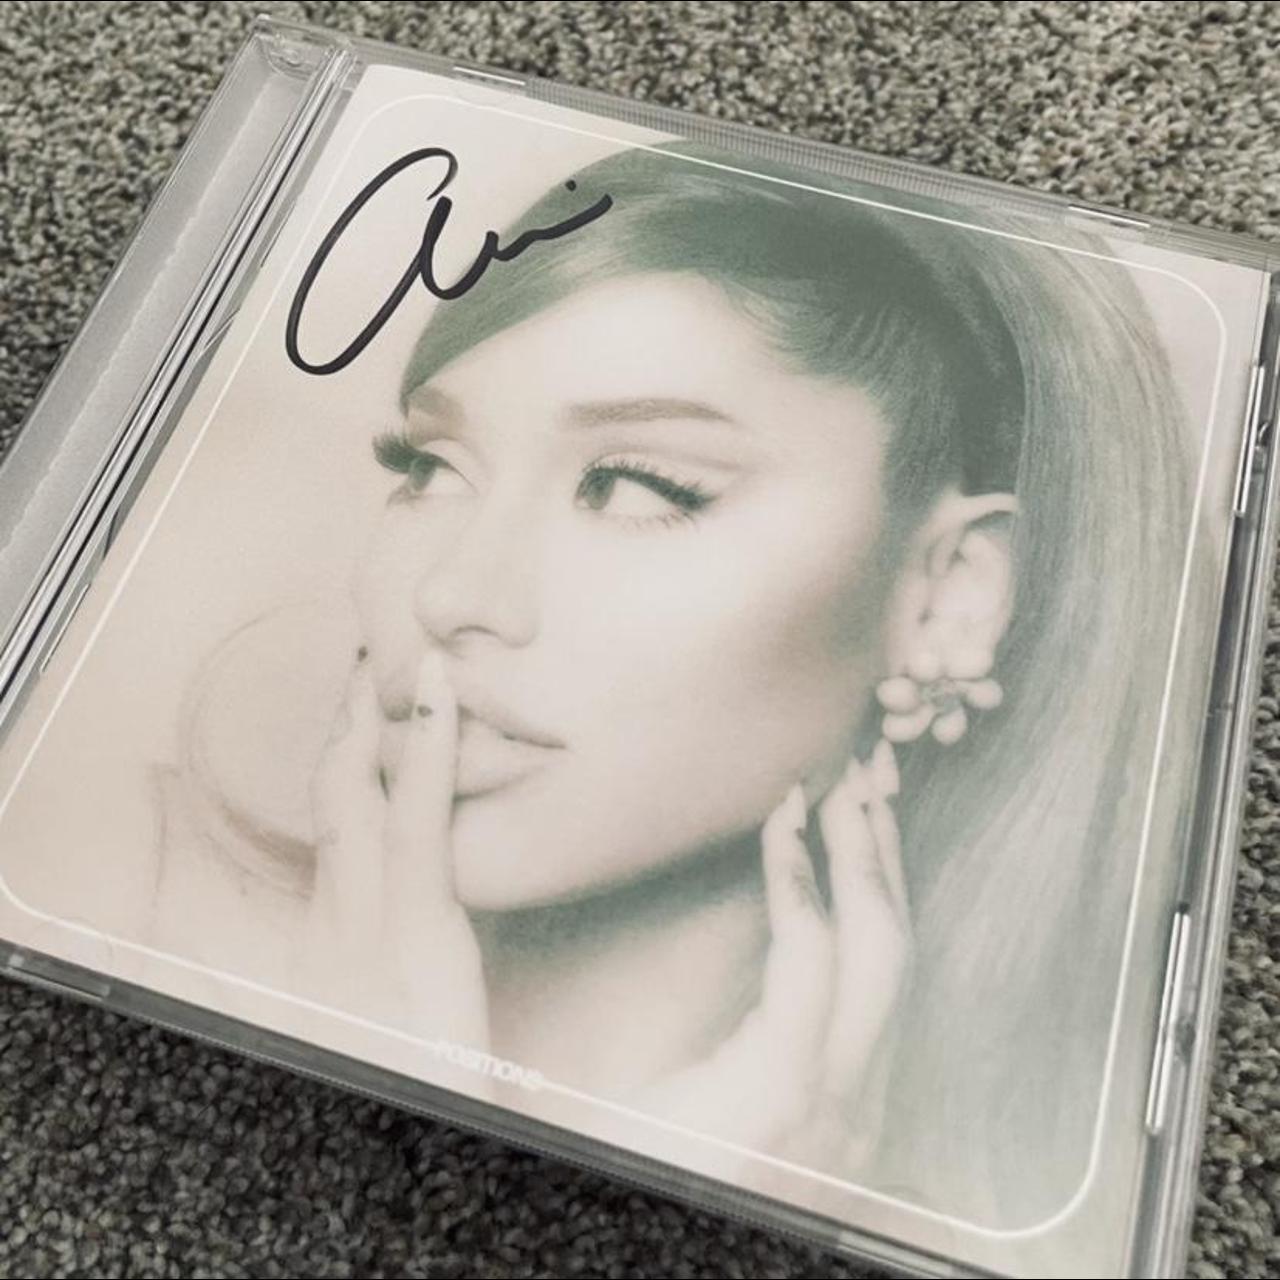 Positions: CD - Ariana Grande